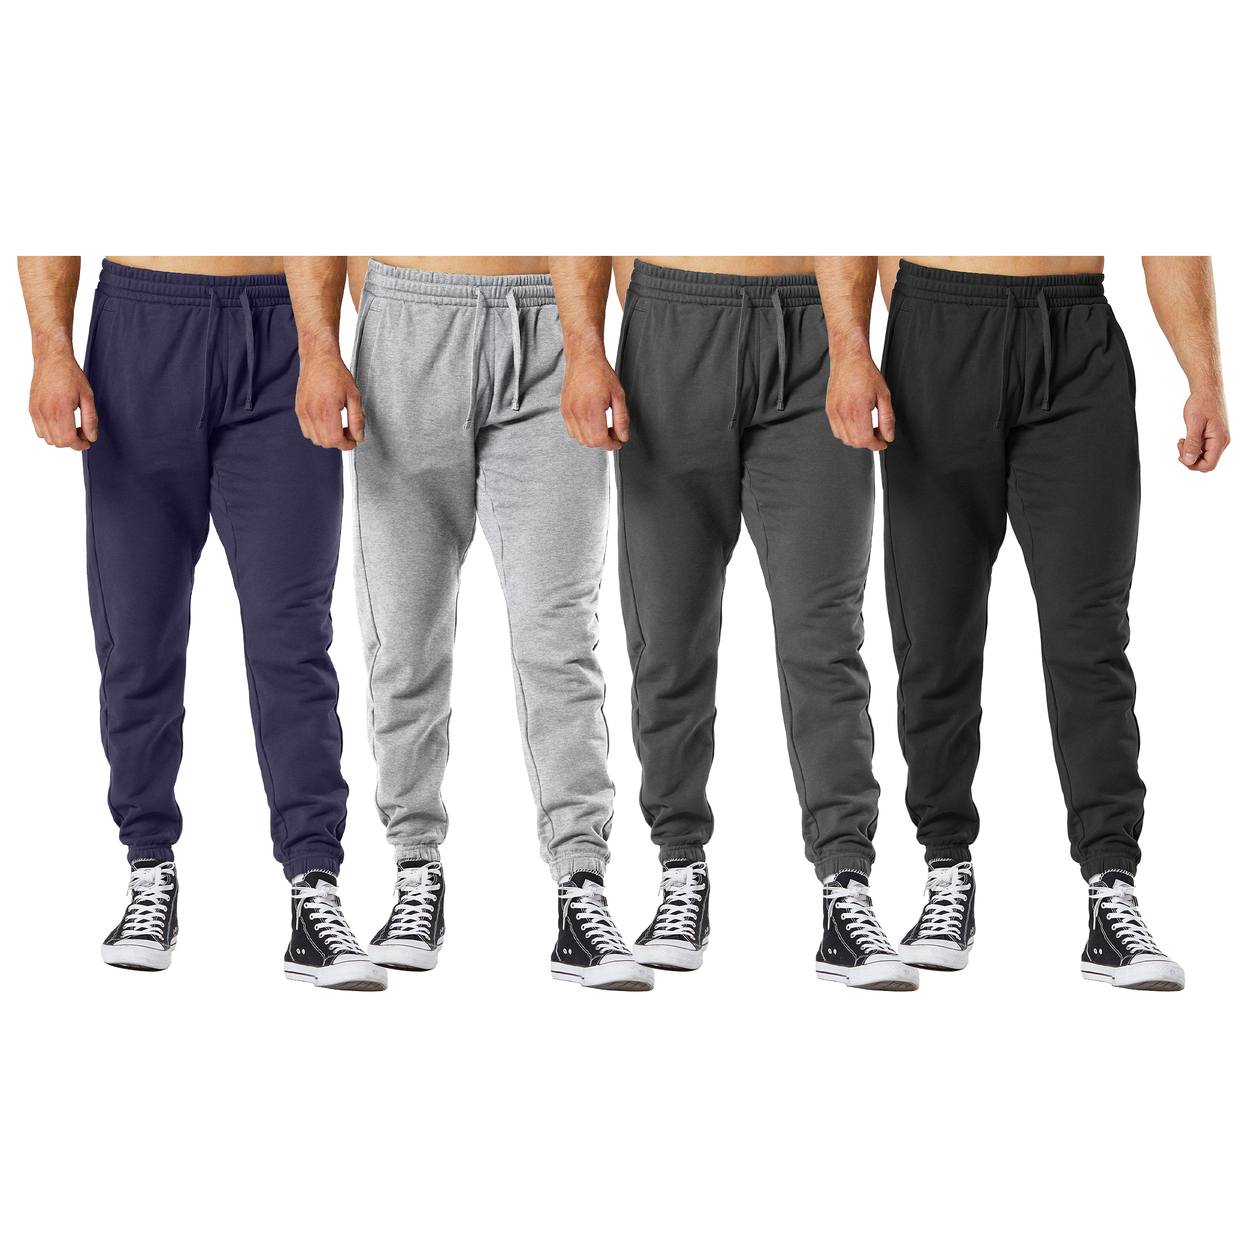 Men's Ultra-Soft Cozy Winter Warm Casual Fleece Lined Sweatpants Jogger - Charcoal, Small